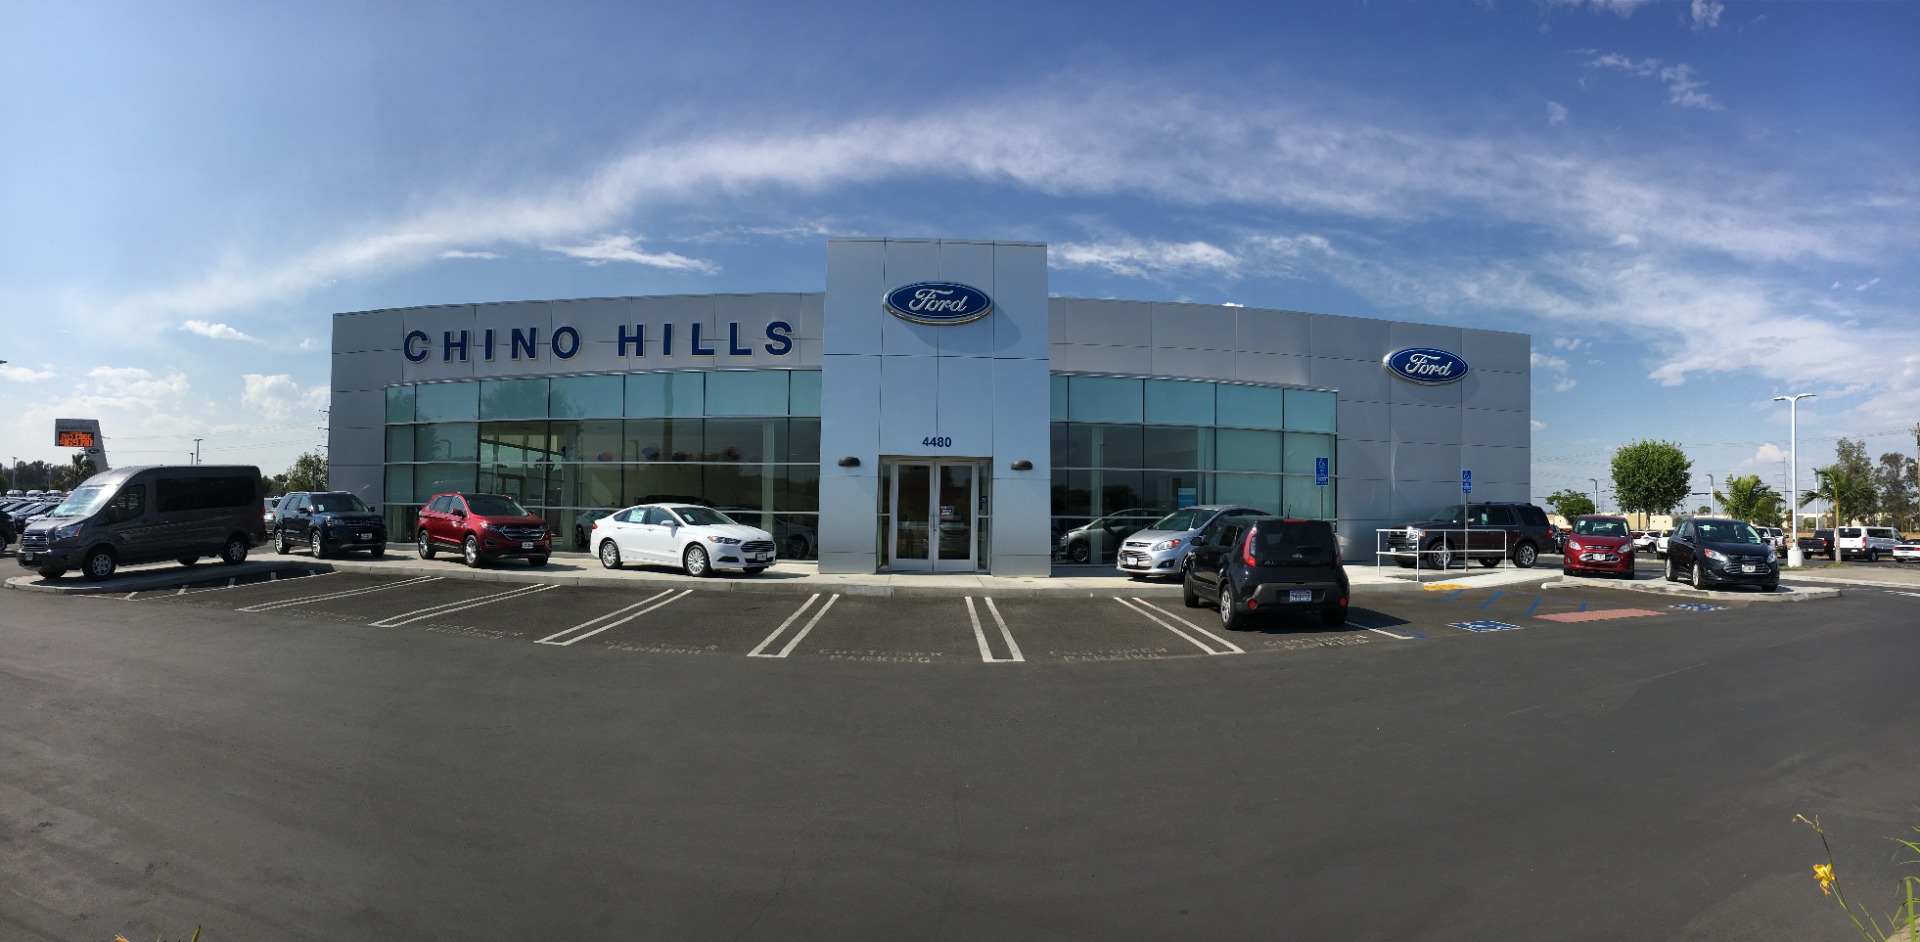 Chino Hills Ford